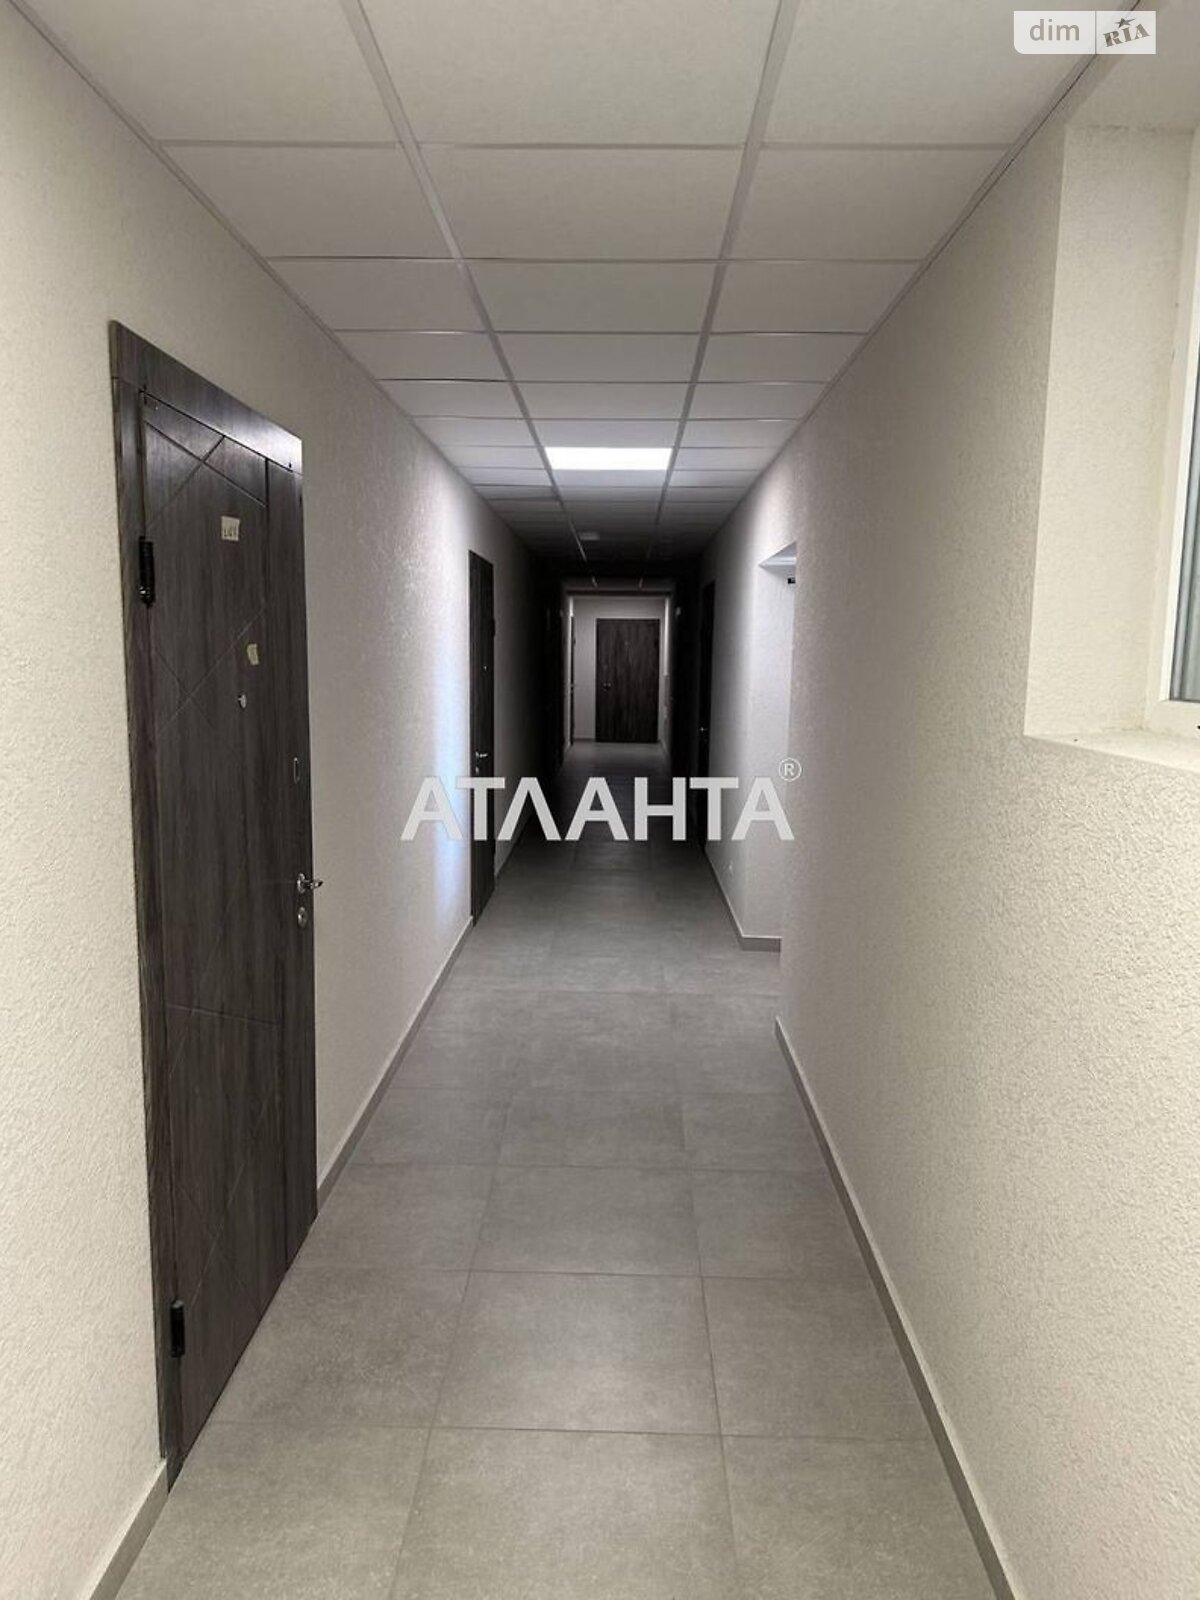 Продажа однокомнатной квартиры в Авангарде, на ул. Василия Спрейса, фото 1